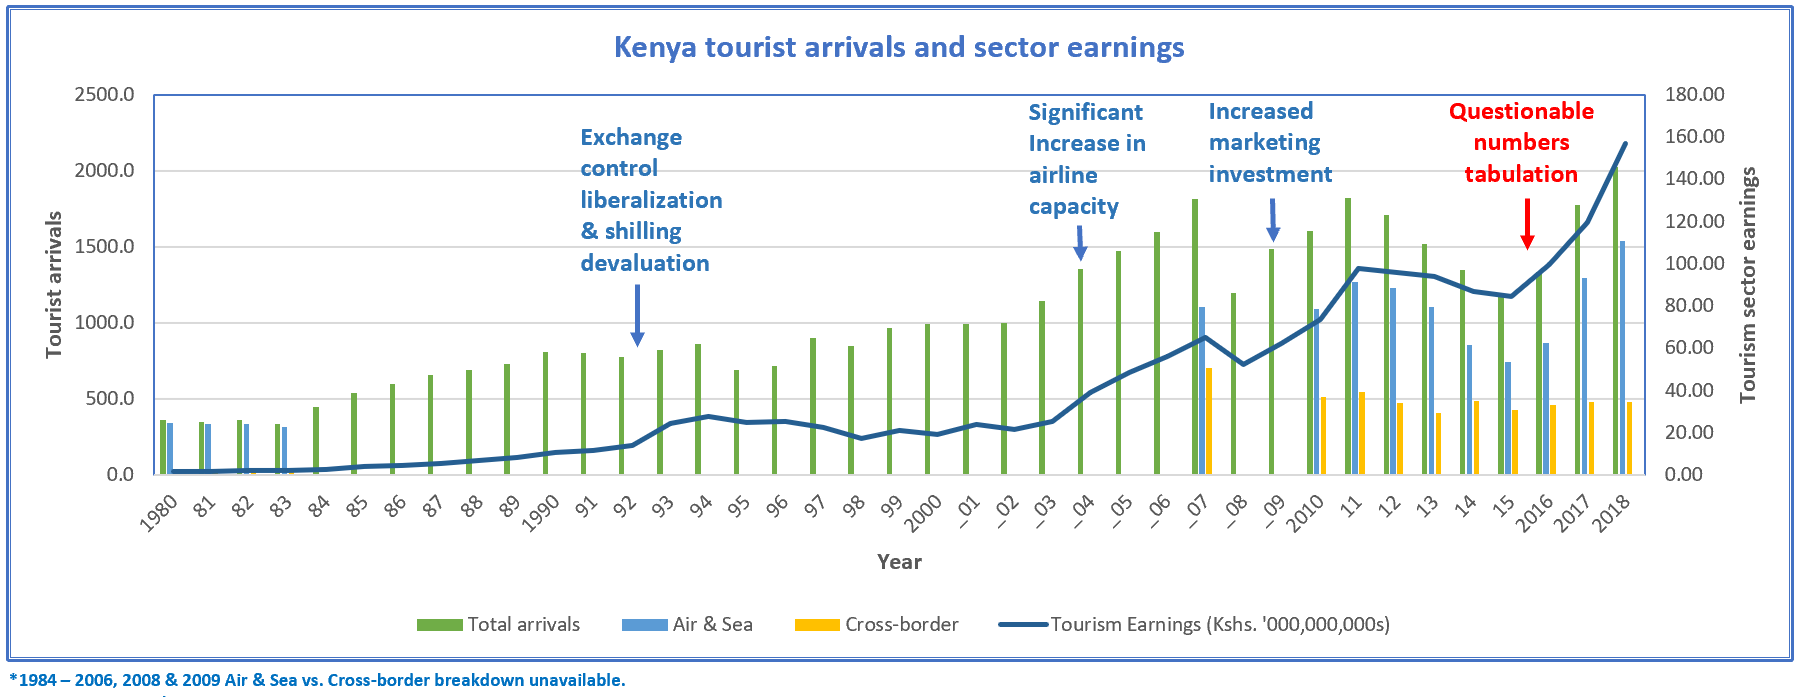 kenya tourism statistics 2020